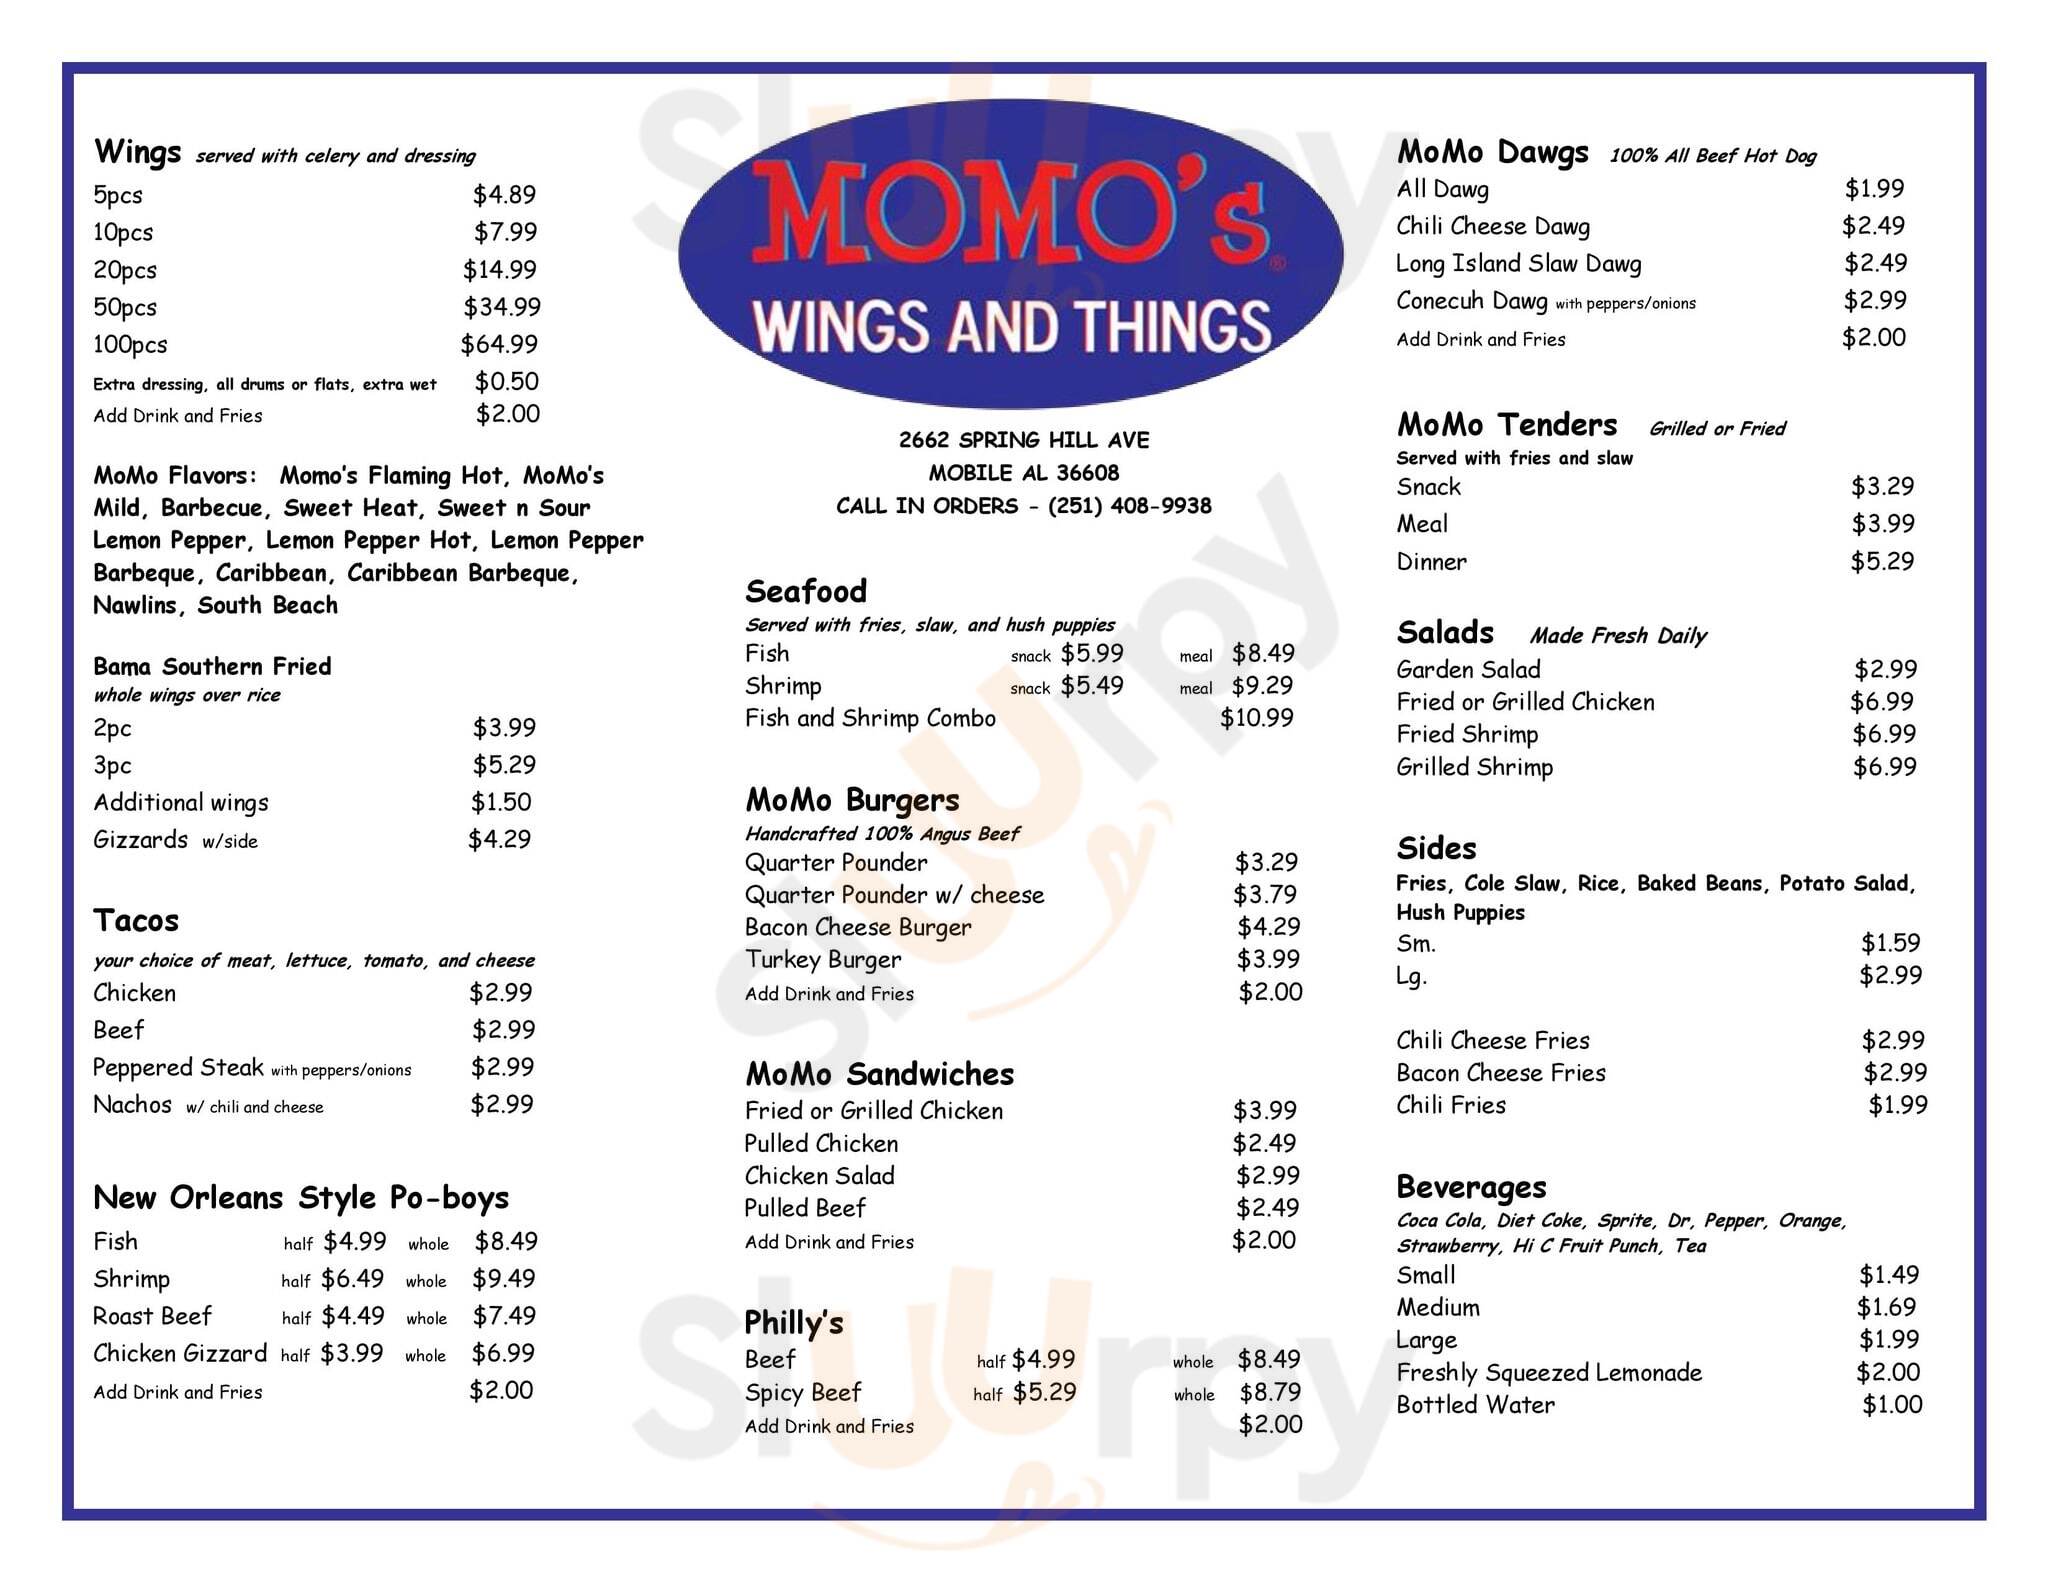 Momo's Wings And Things Mobile Menu - 1